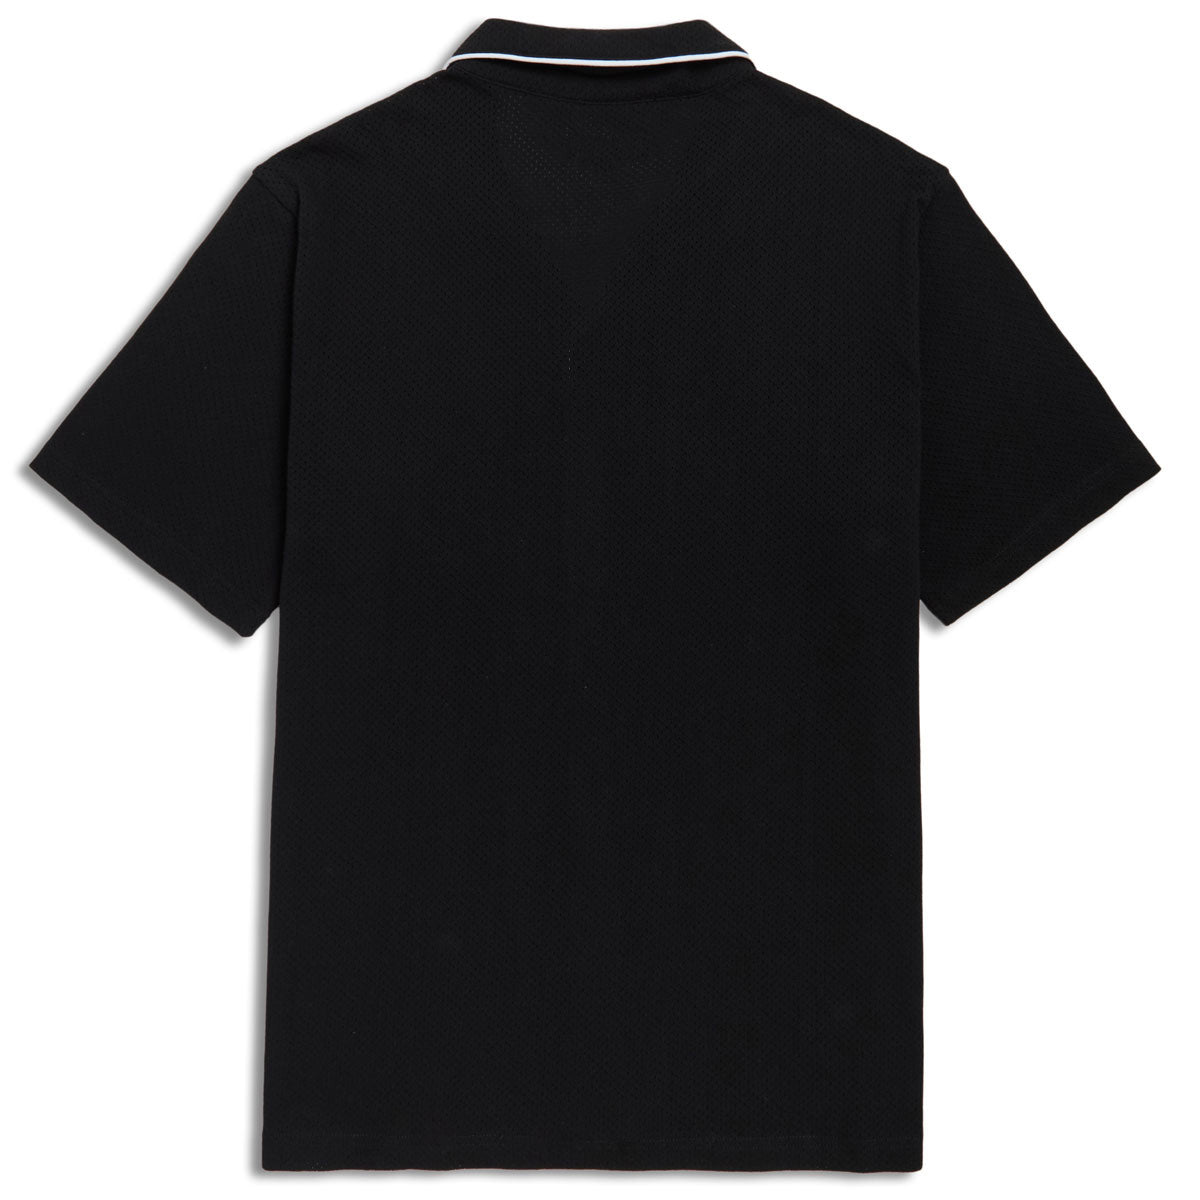 CCS Lounge Mesh Shirt - Black image 5